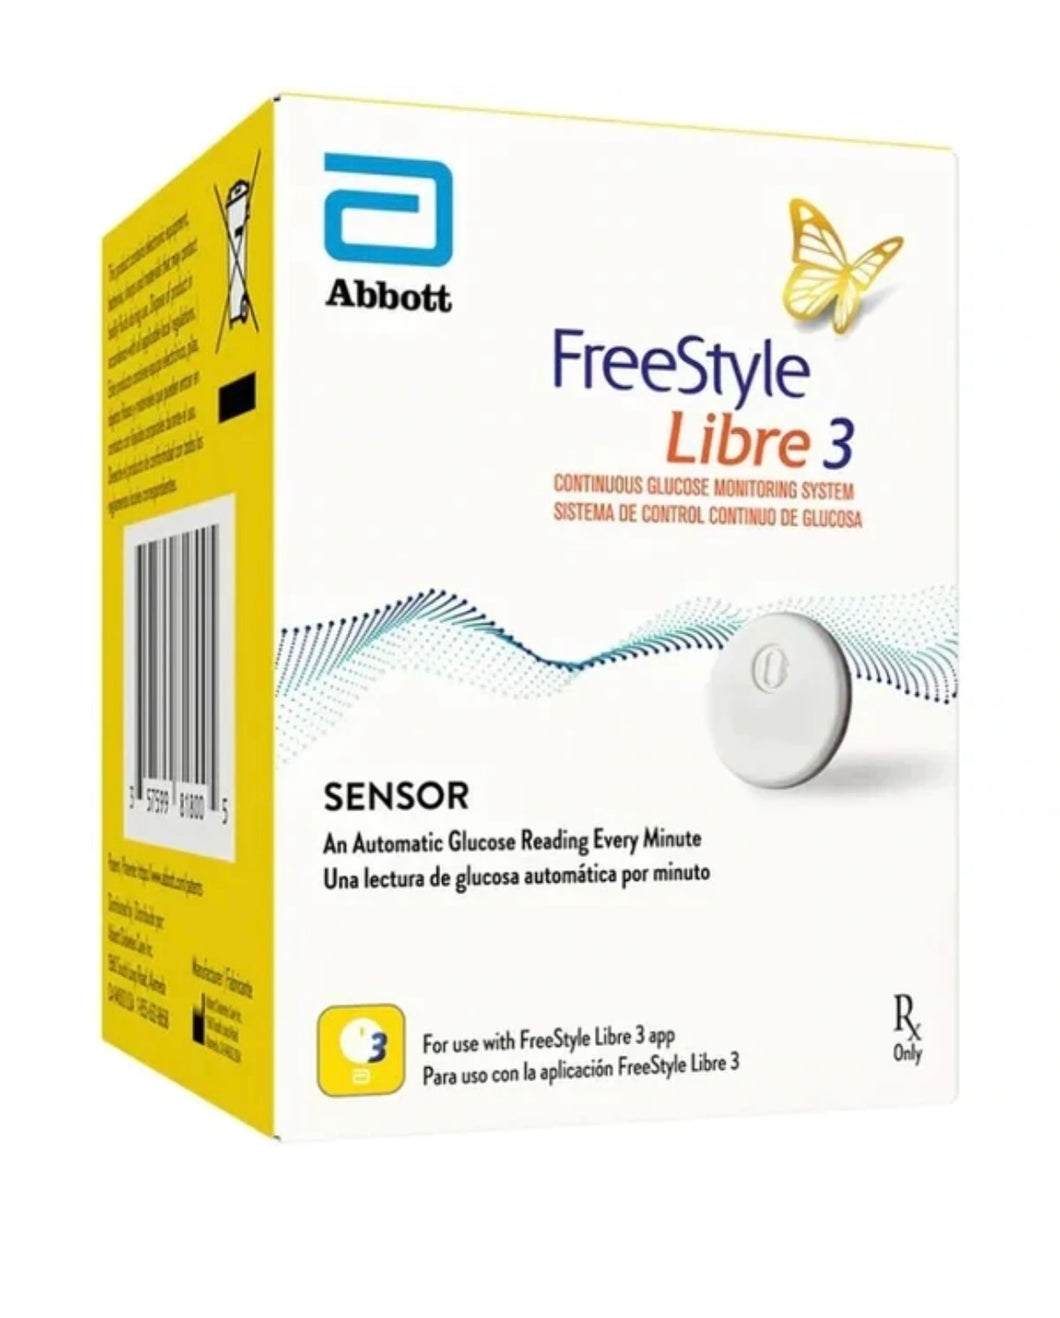 Freestyle libre 3 sensor